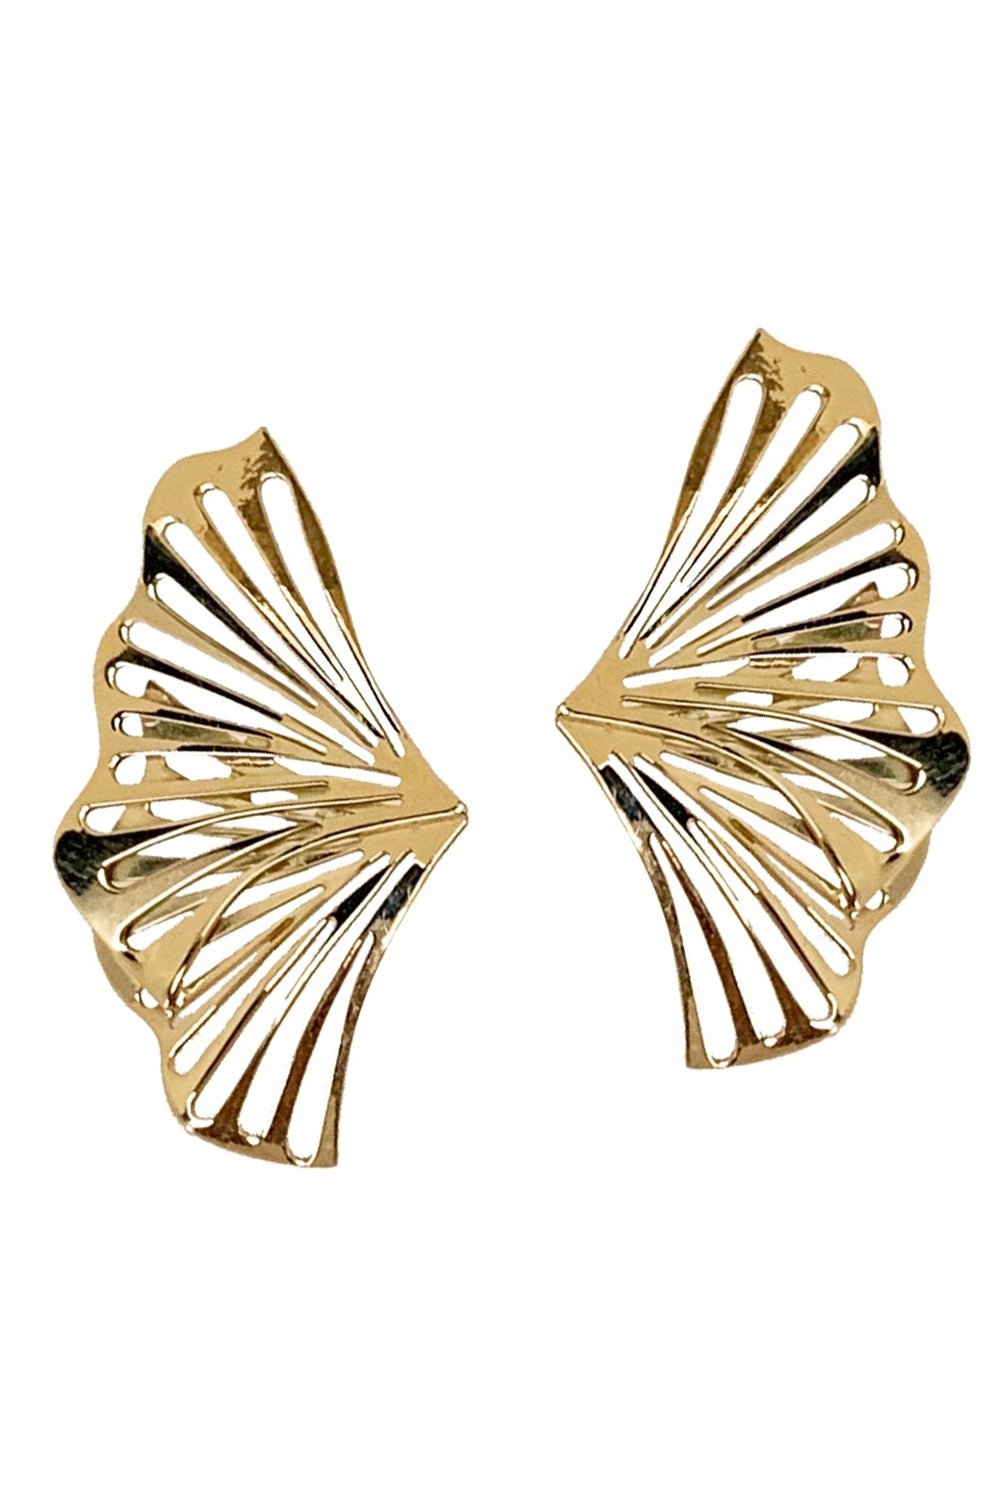 CAROL KAUFFMANN-Nouveau Earrings-YELLOW GOLD